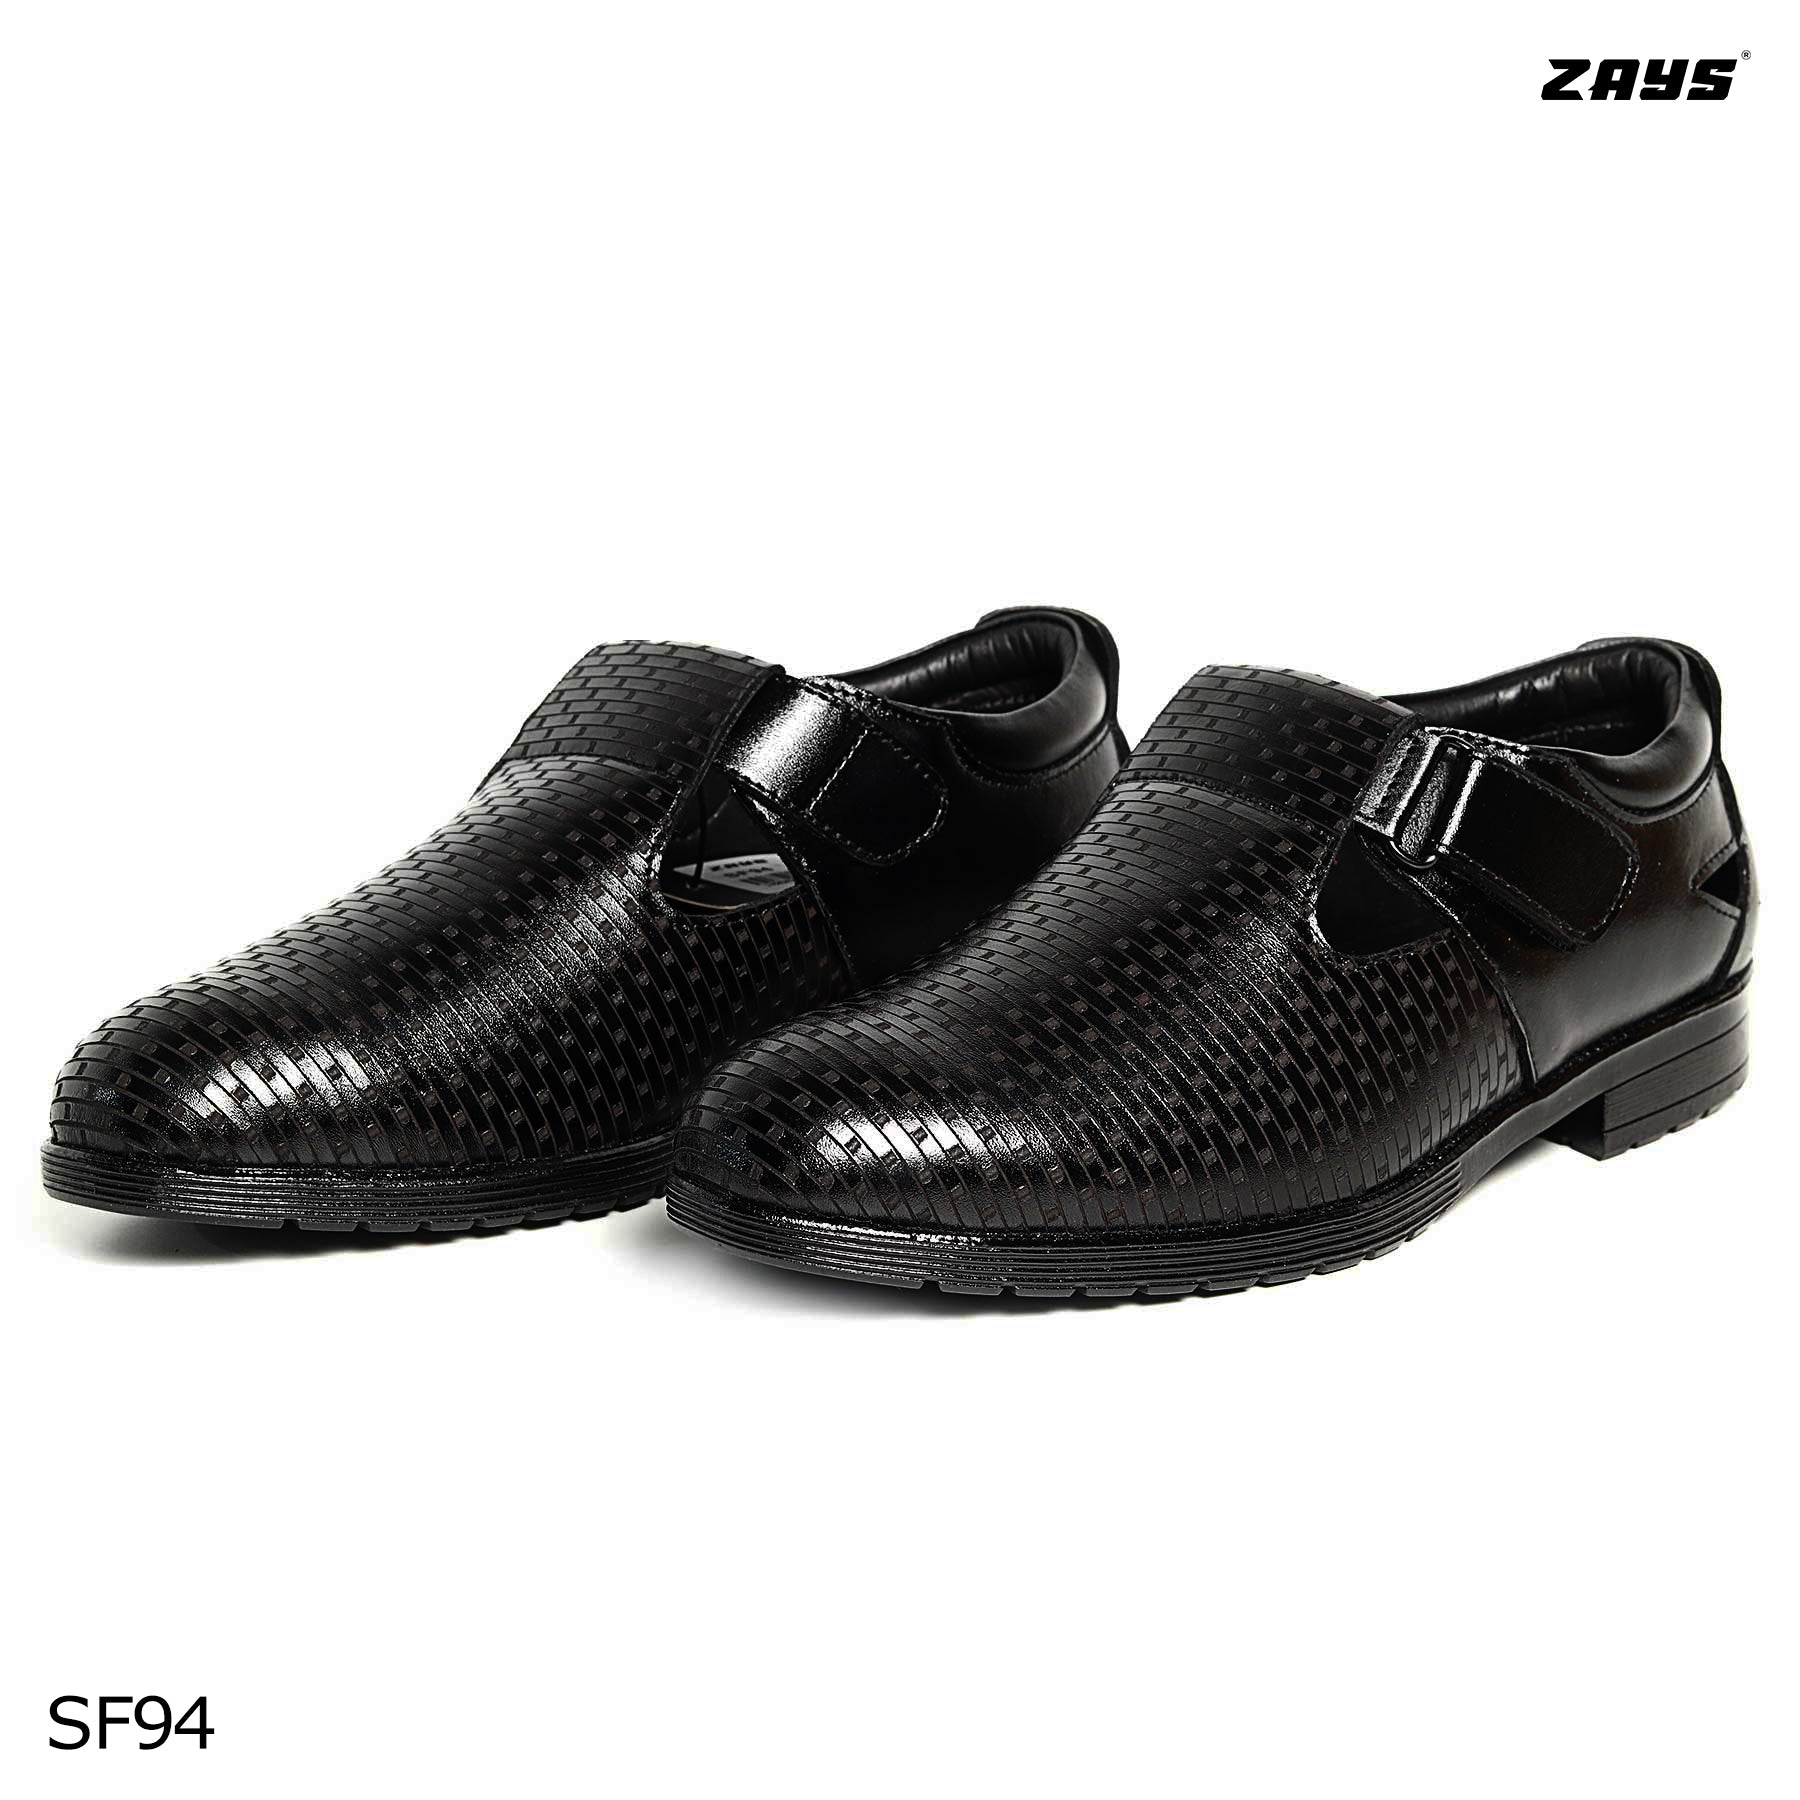 Zays Leather Premium Casual Shoe For Men (Black) - SF94